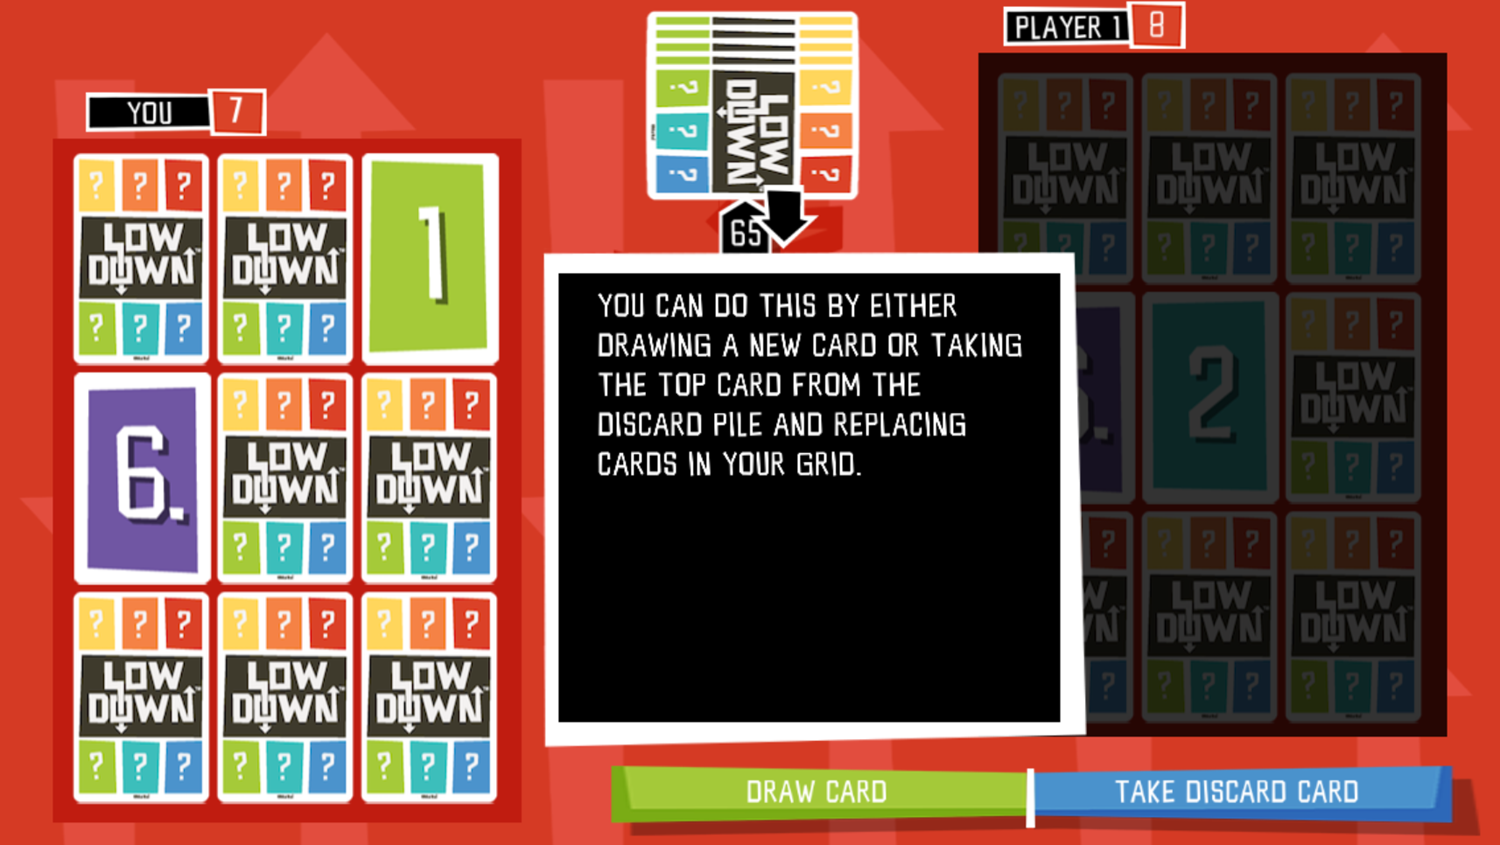 Low Down Game Instructions Screenshot.